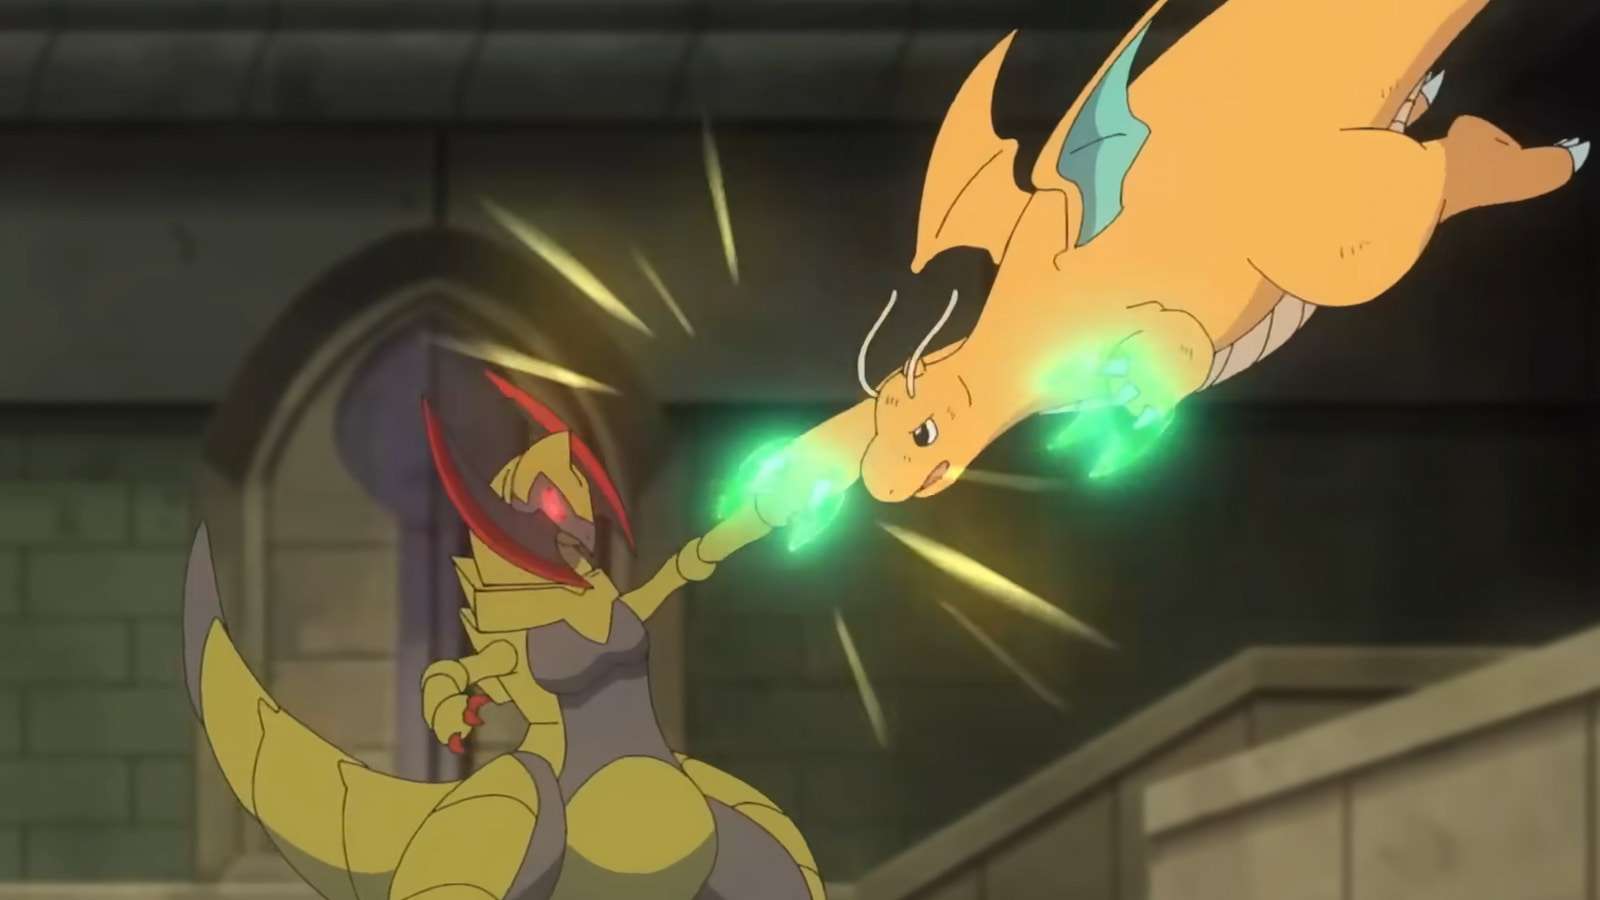 Ash's Dragonite fighting Haxorus in the Pokemon anime